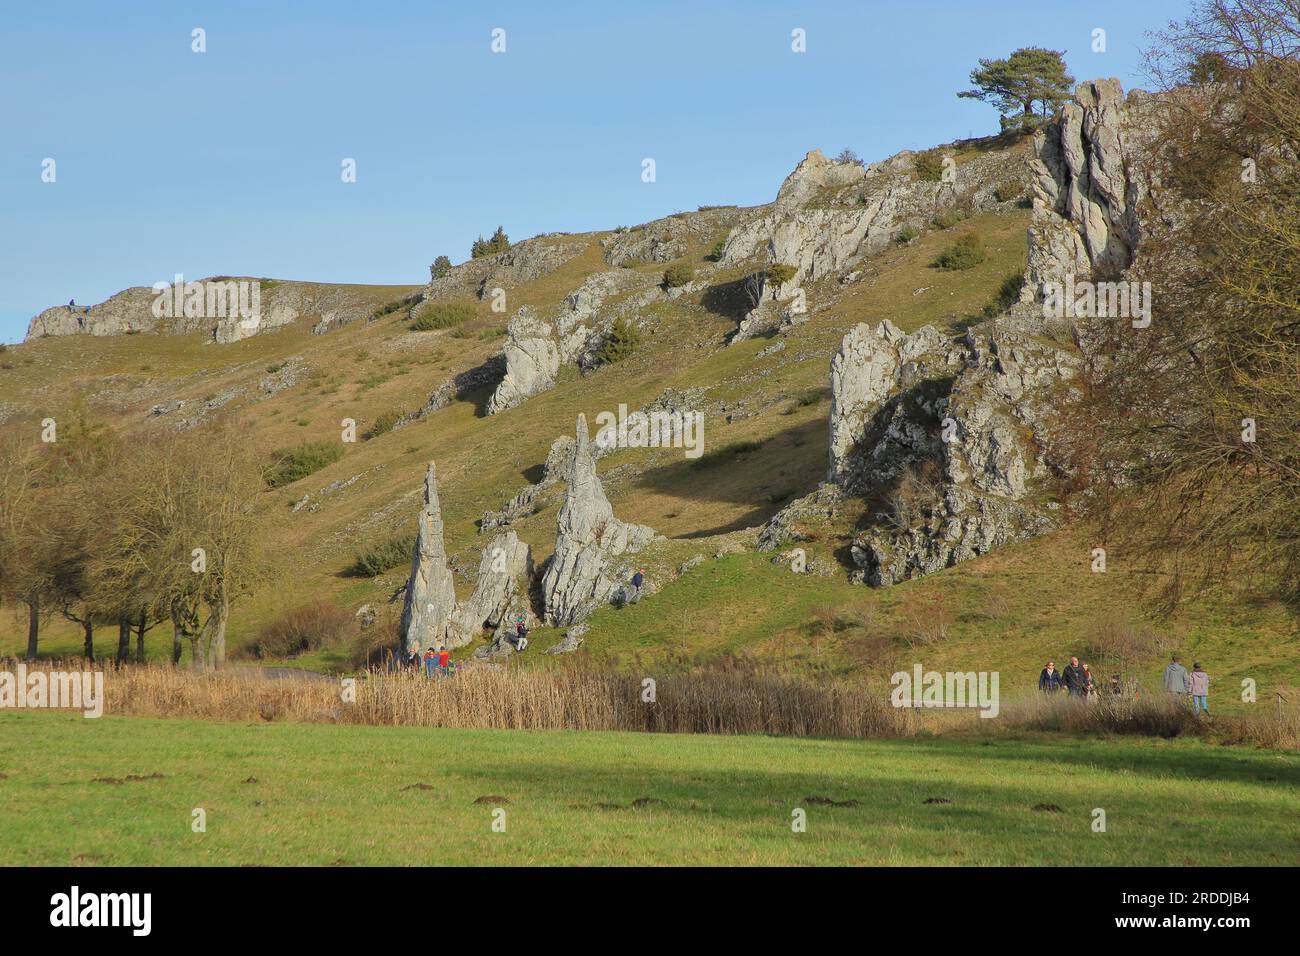 Brenztal with Steinerne Jungfrauen rock formations, Eselsburger Tal, Eselsburg, Herbrechtingen, Swabian Jura, Baden-Württemberg, Germany Stock Photo